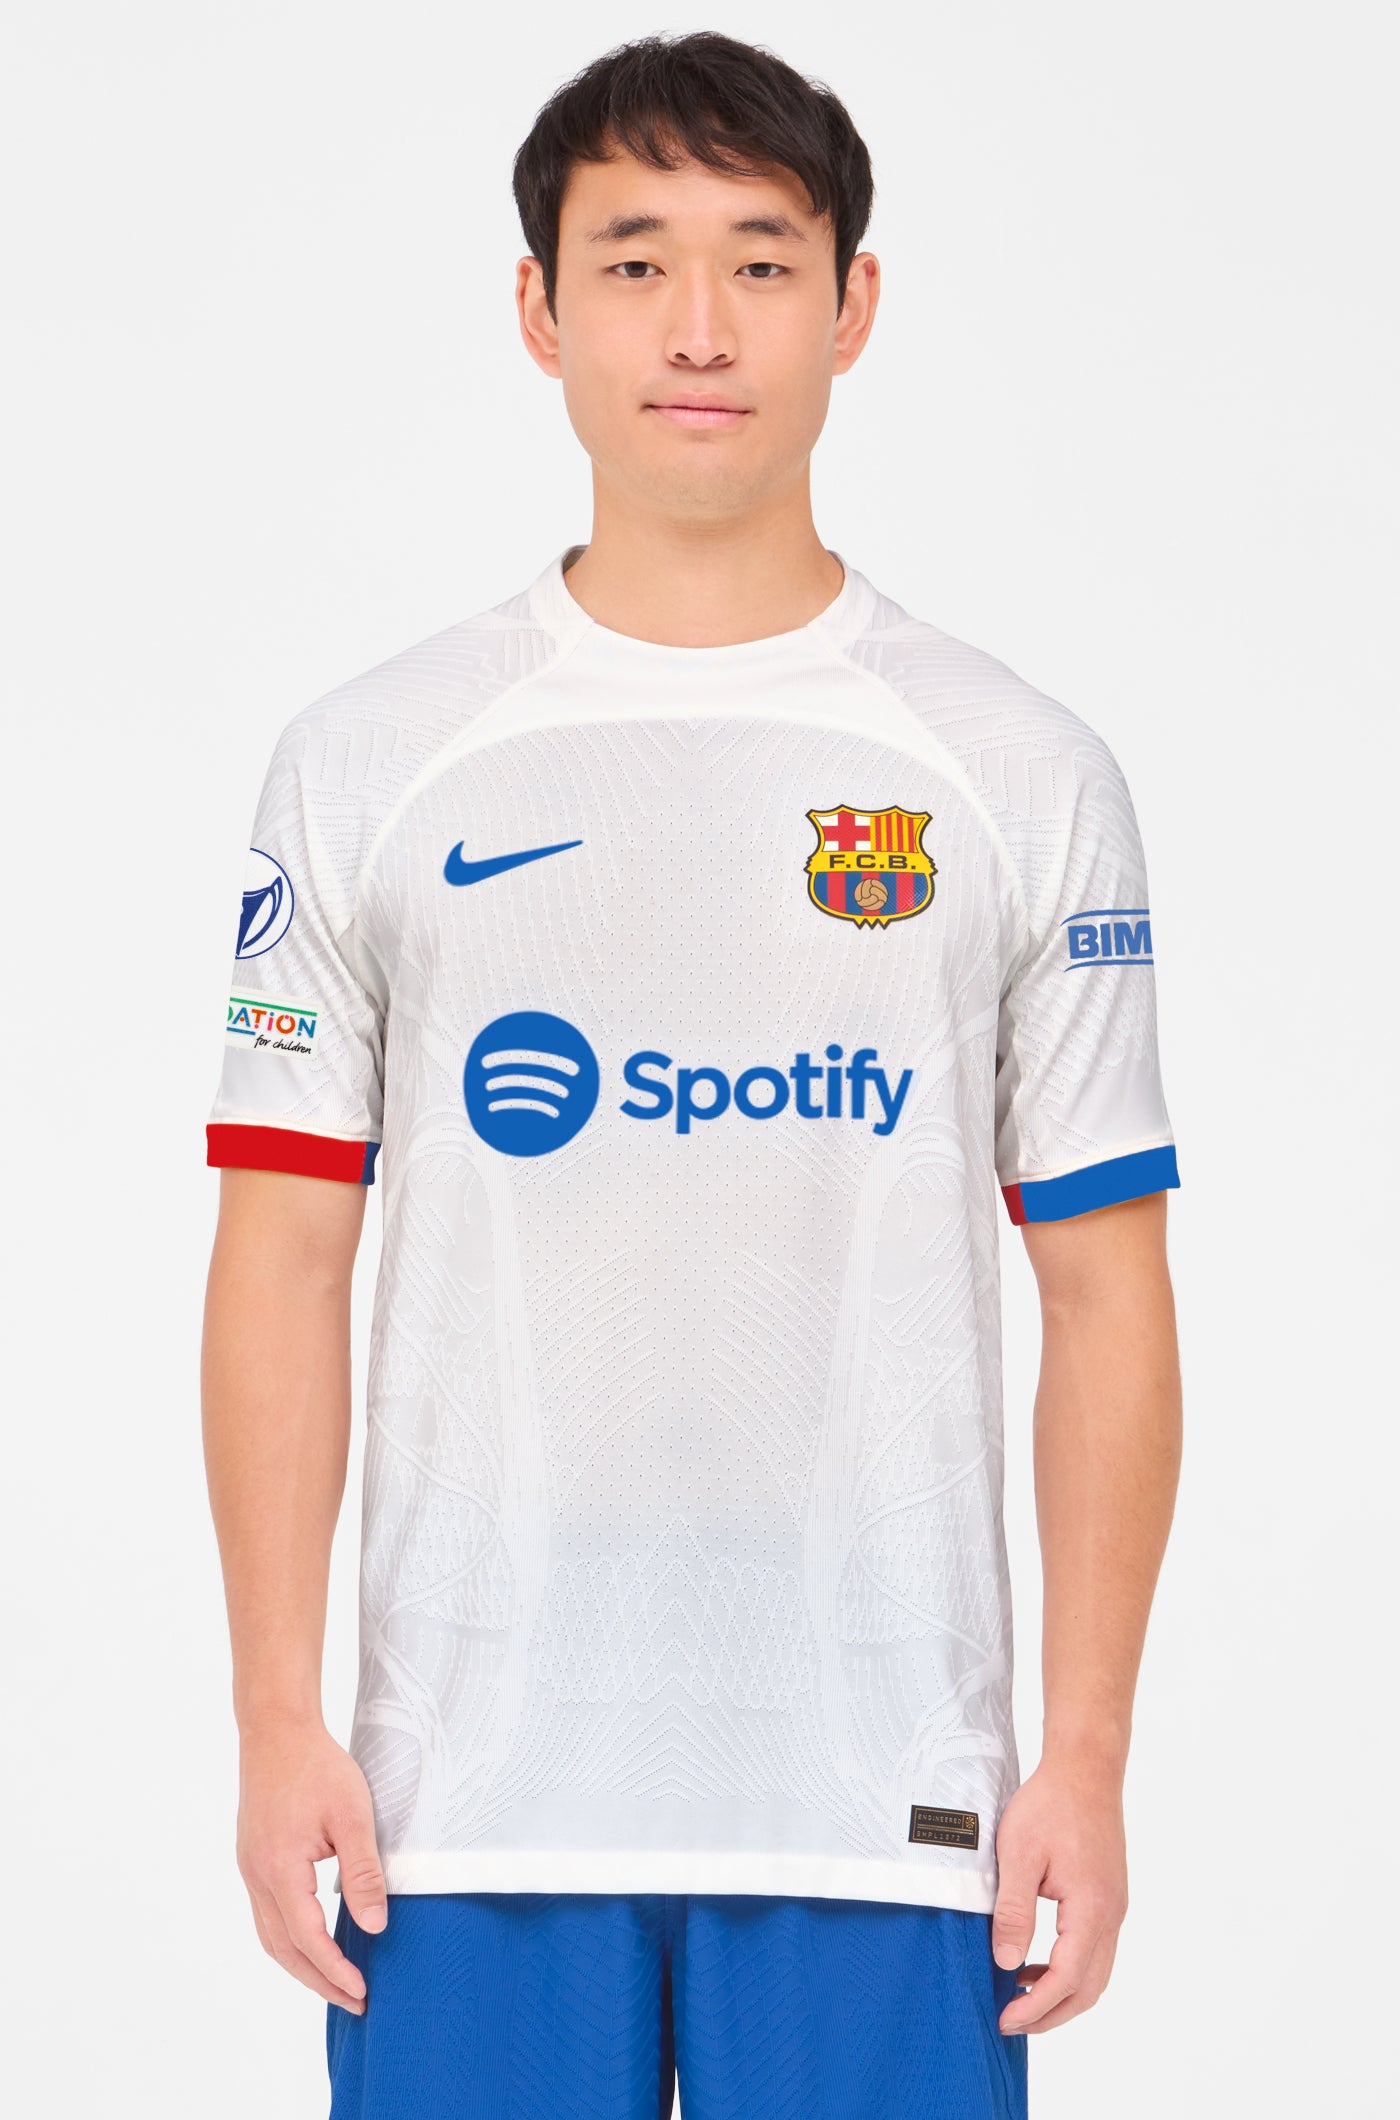 UWCL FC Barcelona away shirt 23/24 Player's Edition - KEIRA